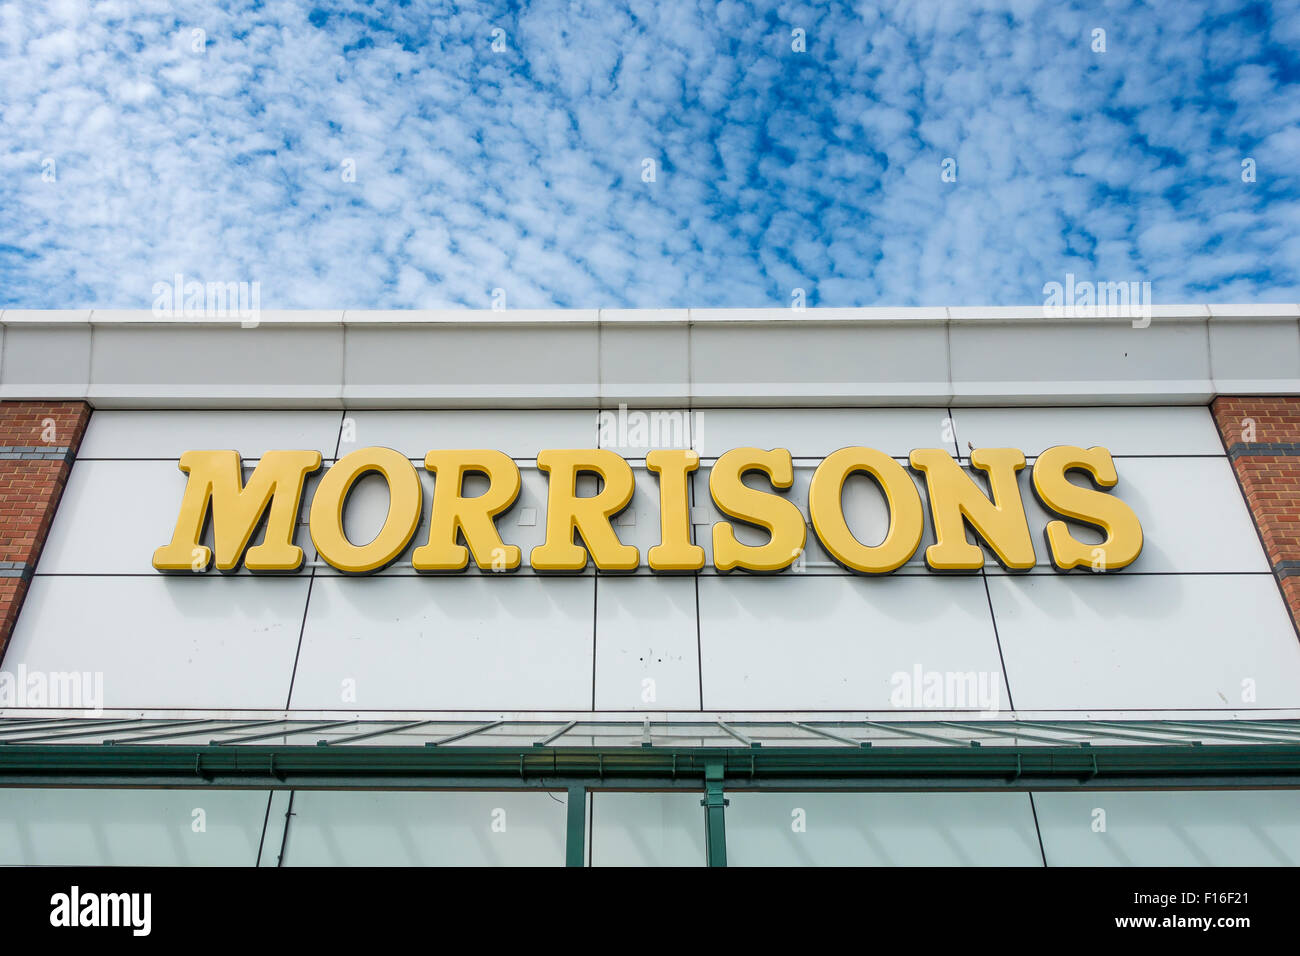 Morrisons Supermarkt Kette Logo Signage Schaufenster Stockfoto